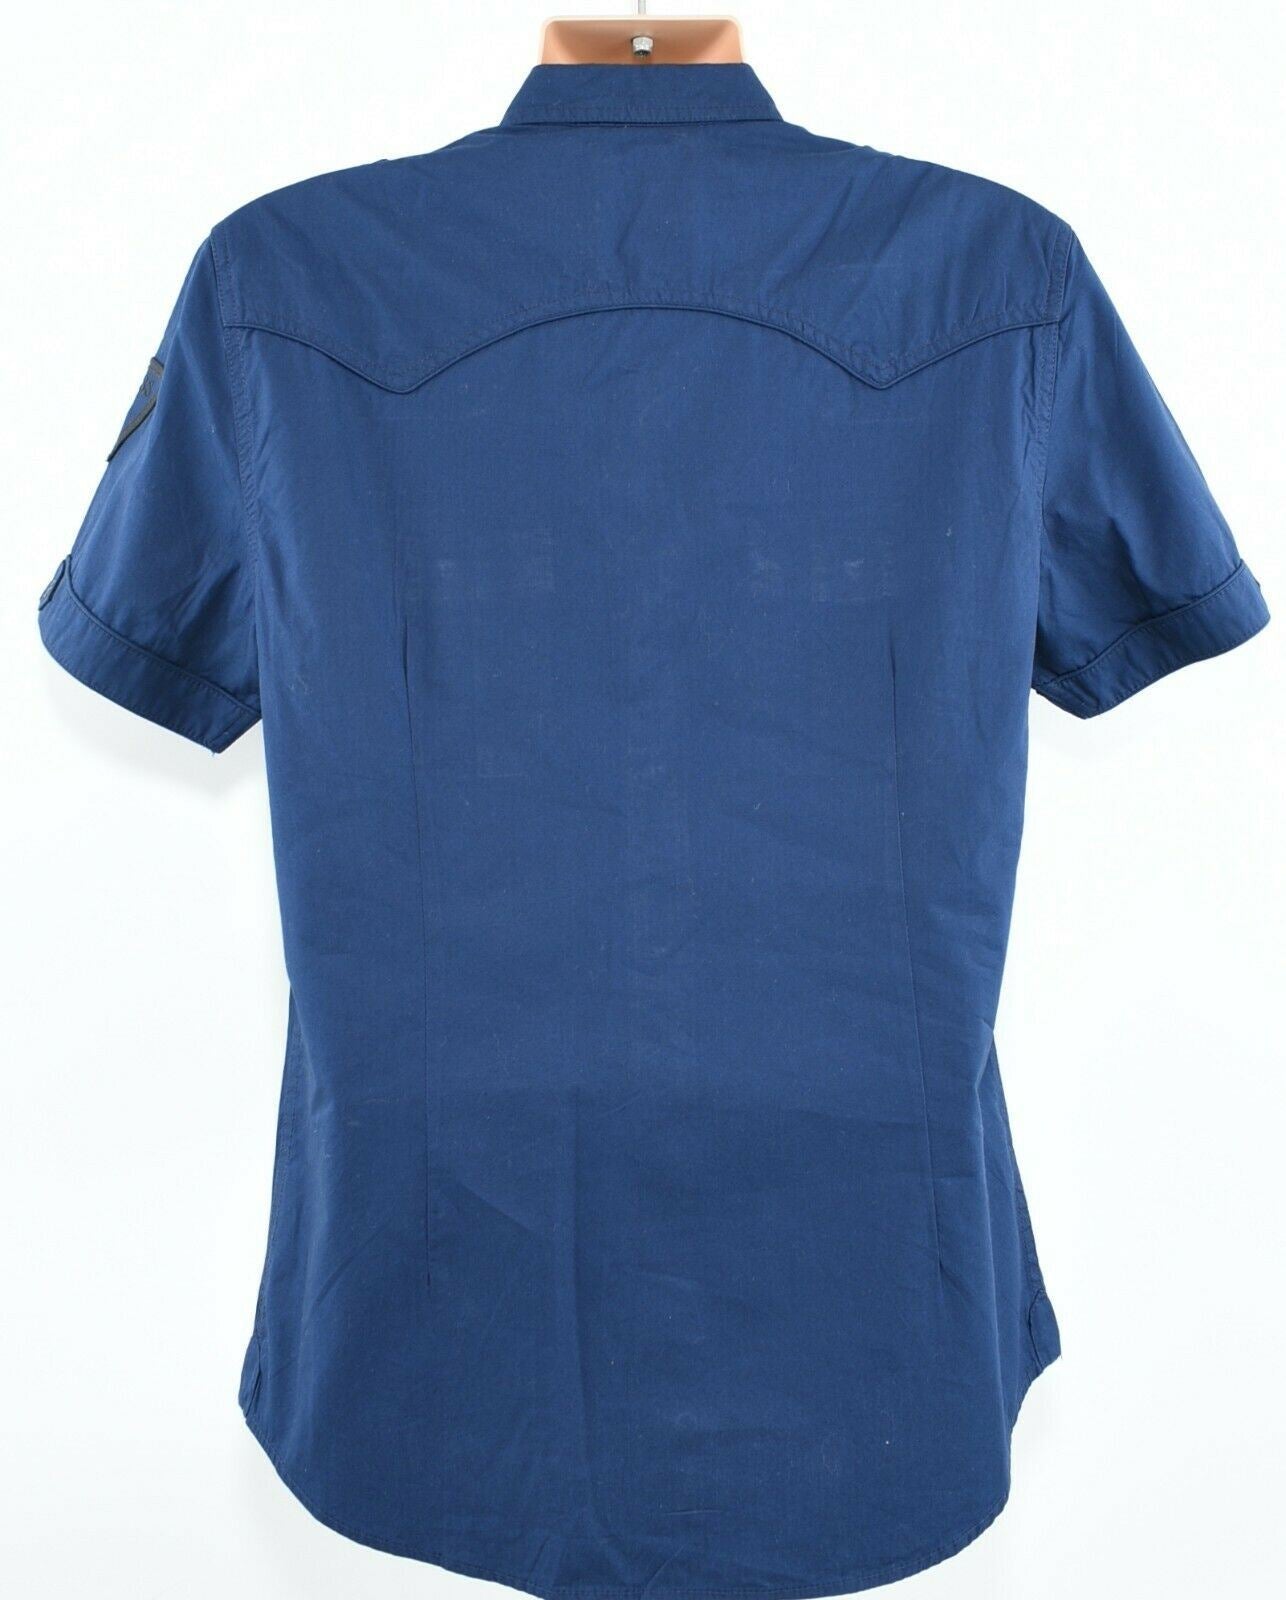 GUESS Men's Short Sleeve Casual Cotton Shirt, Ink Blue, size M